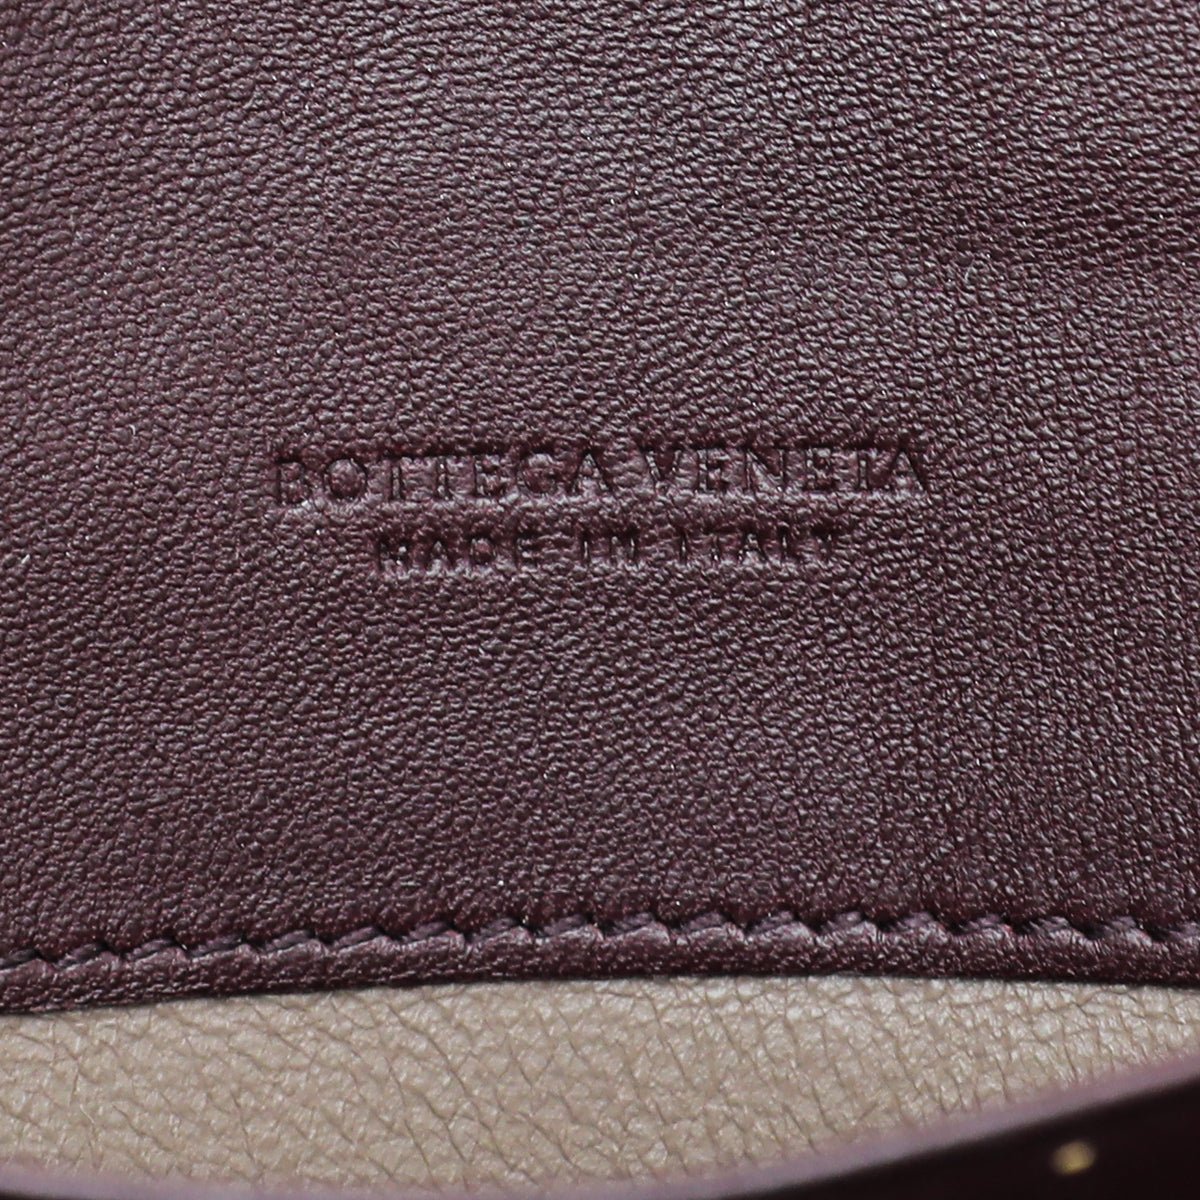 Bottega Veneta - Bottega Veneta Dark Violet Intrecciato Nappa Flap Continental Wallet | The Closet